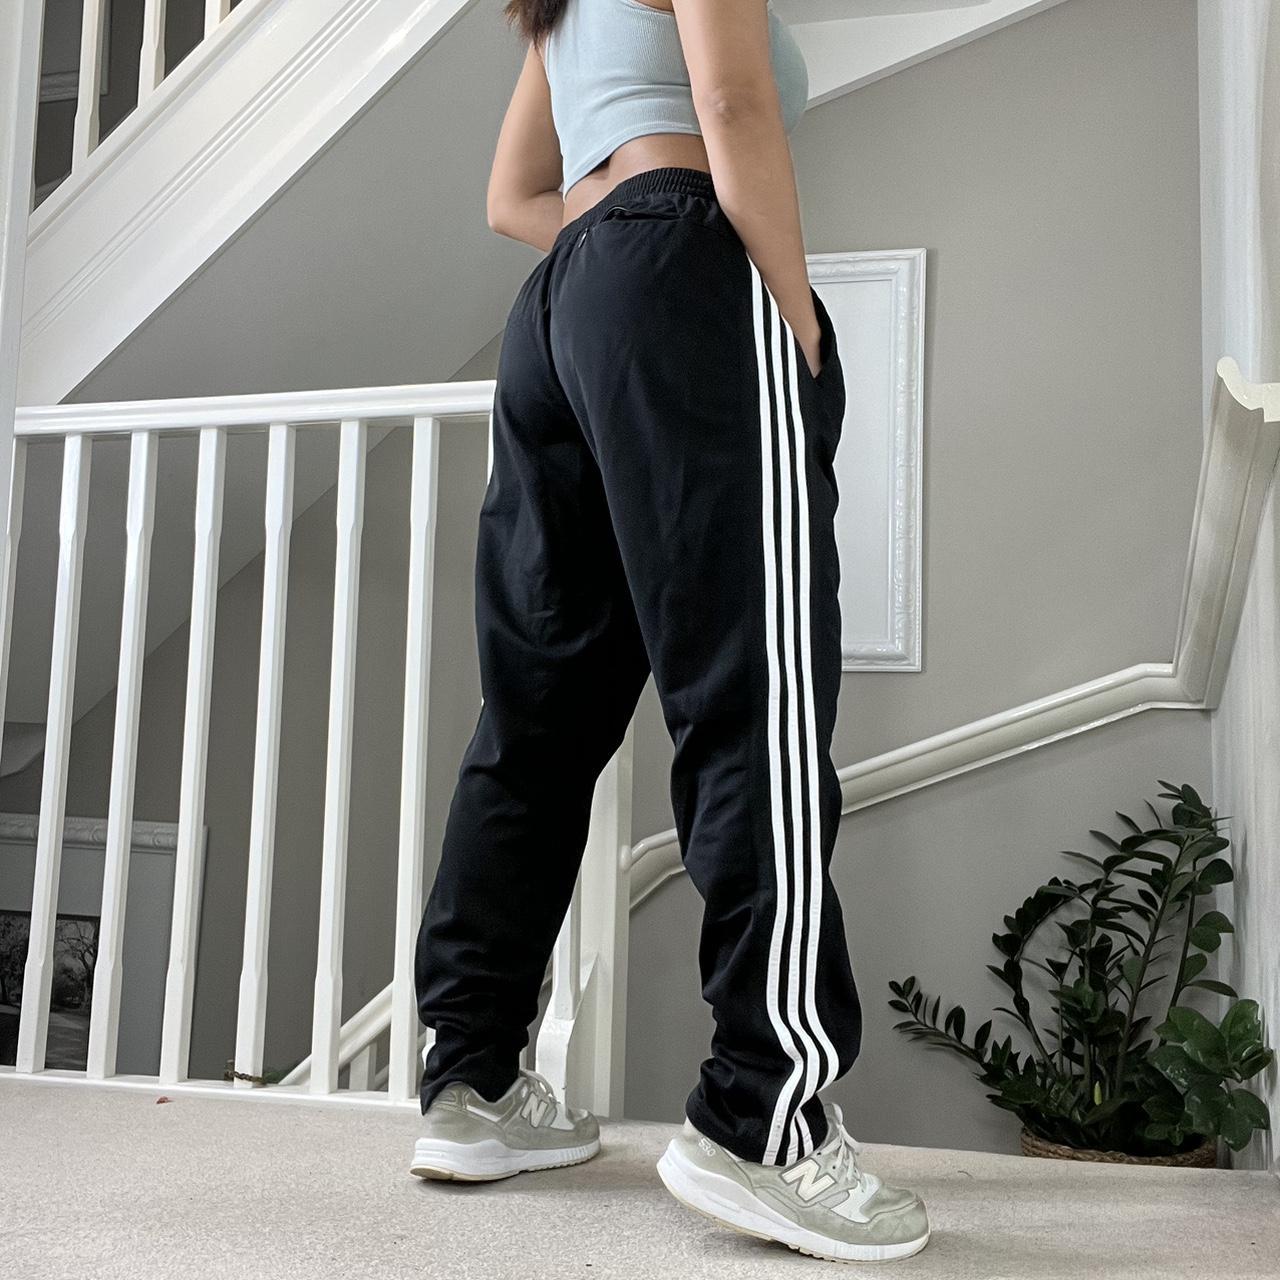 Adidas track pants - Depop